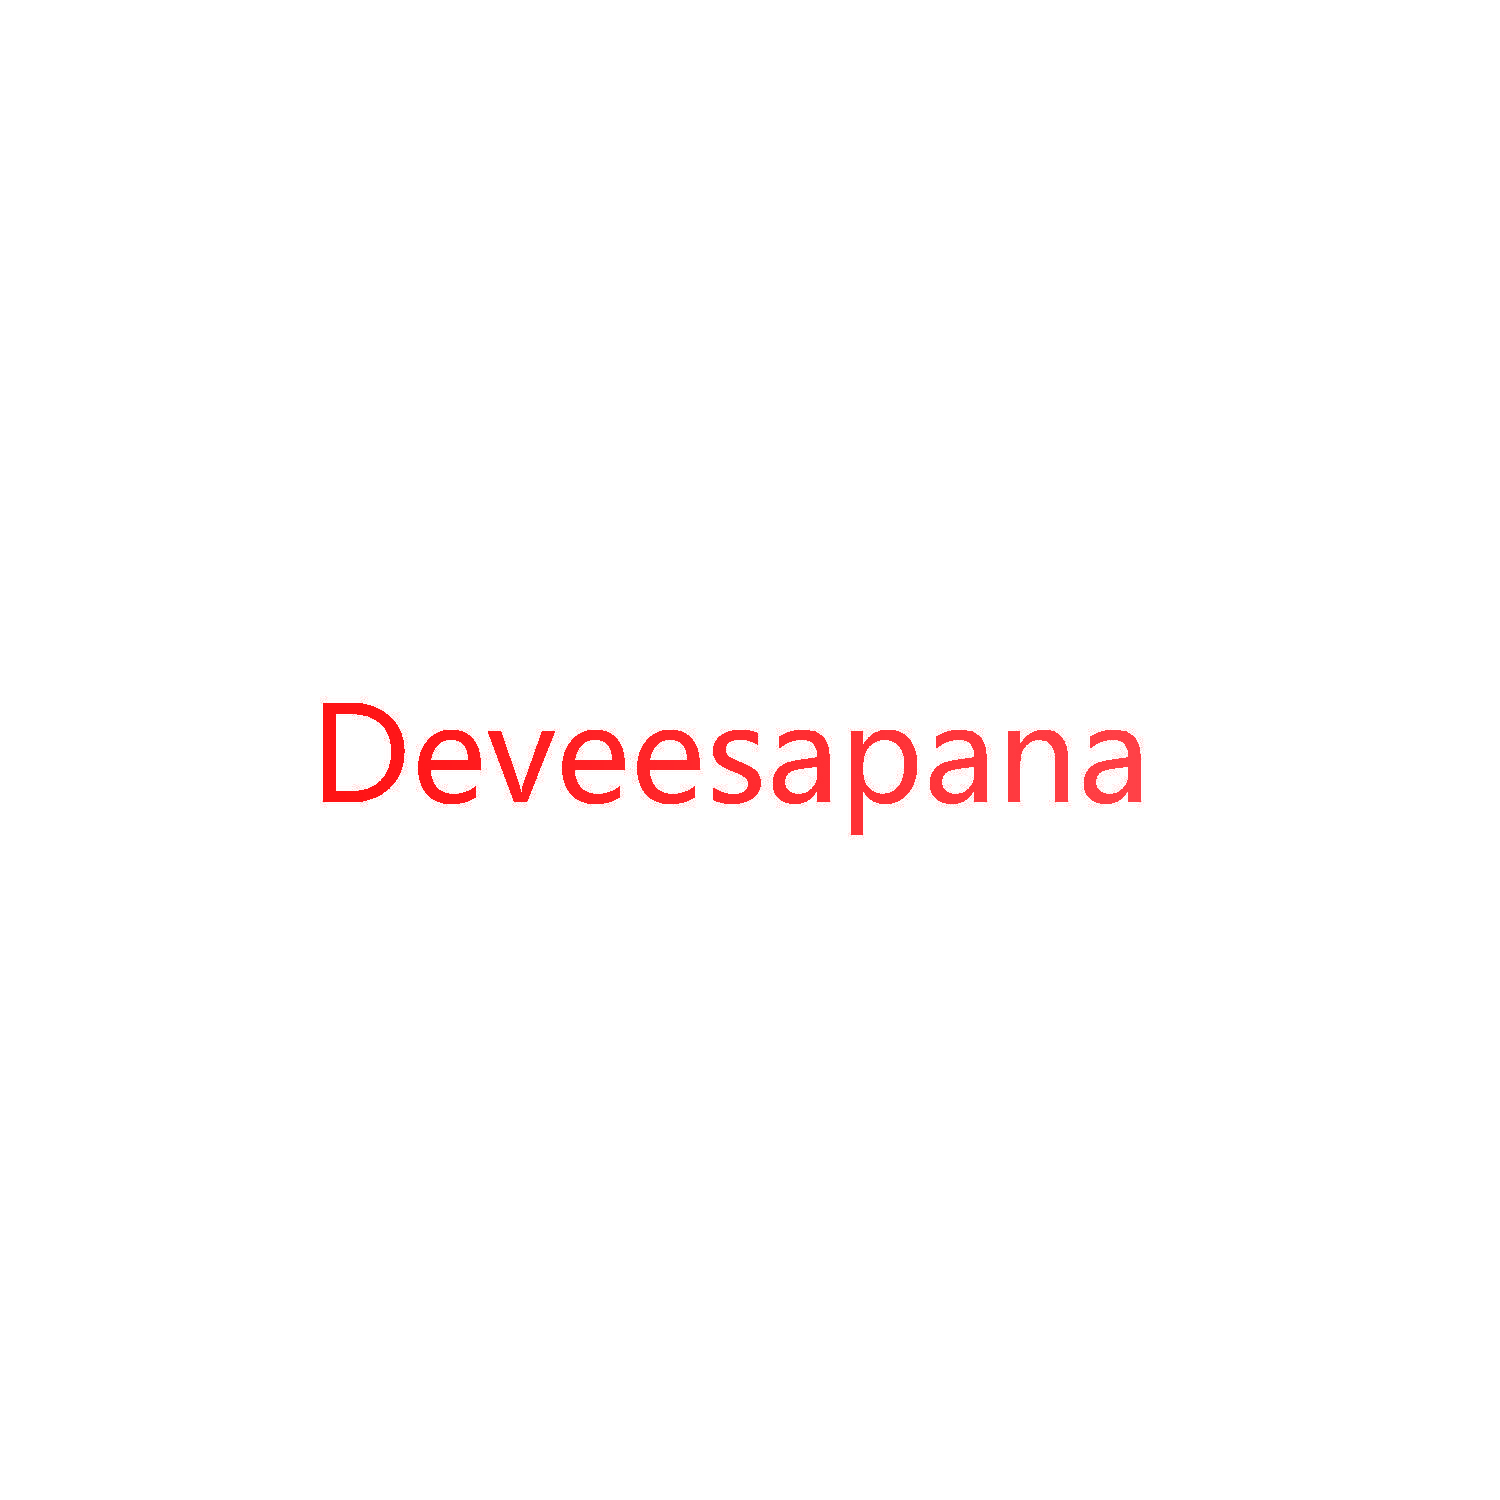 Deveesapana